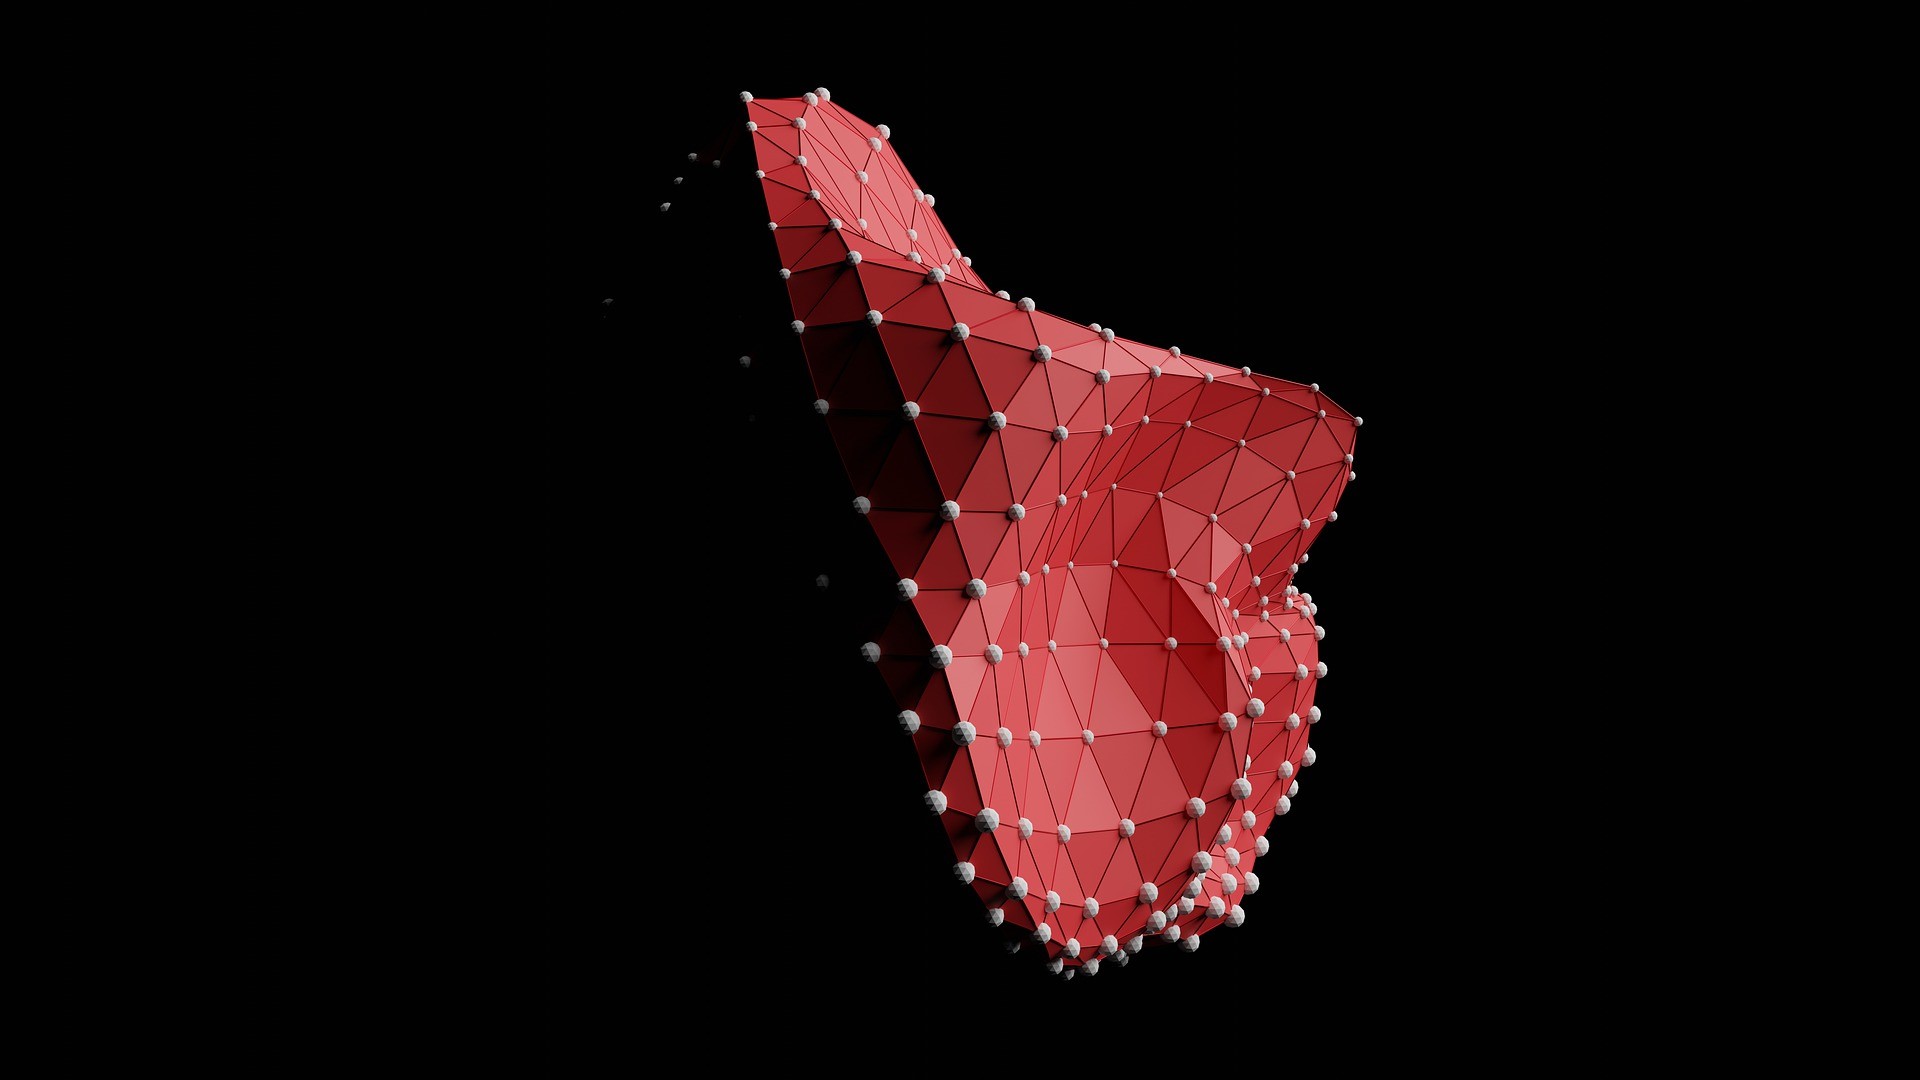 3D Wallpaper Geometric Shapes